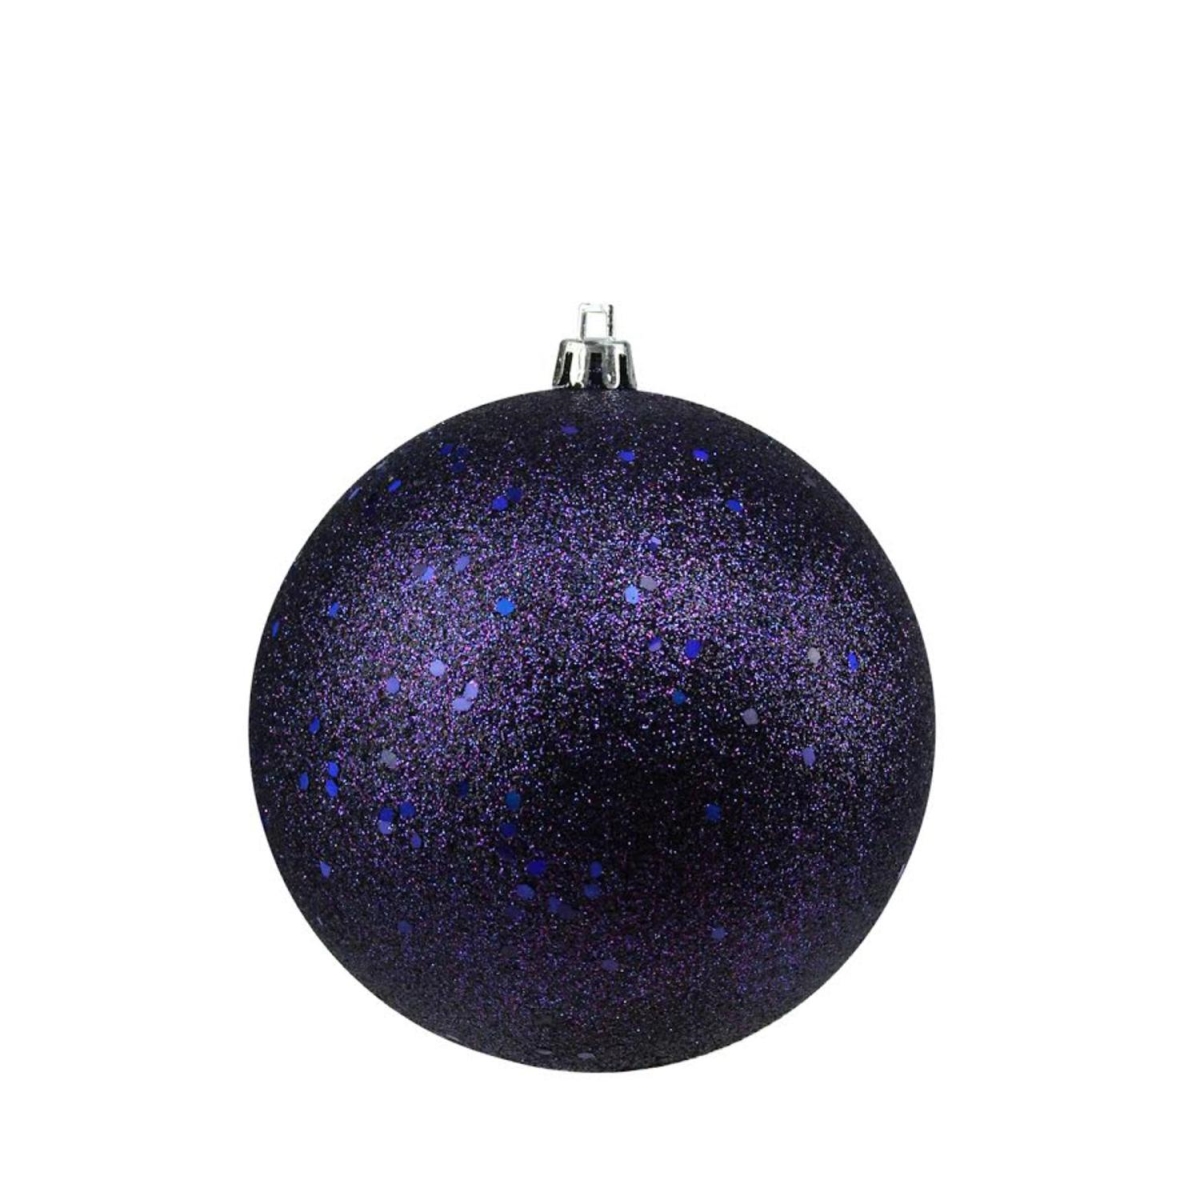 Northlight 32281564 4 in. Shatterproof Christmas Ball Ornament, Indigo Blue & Holographic Glitter